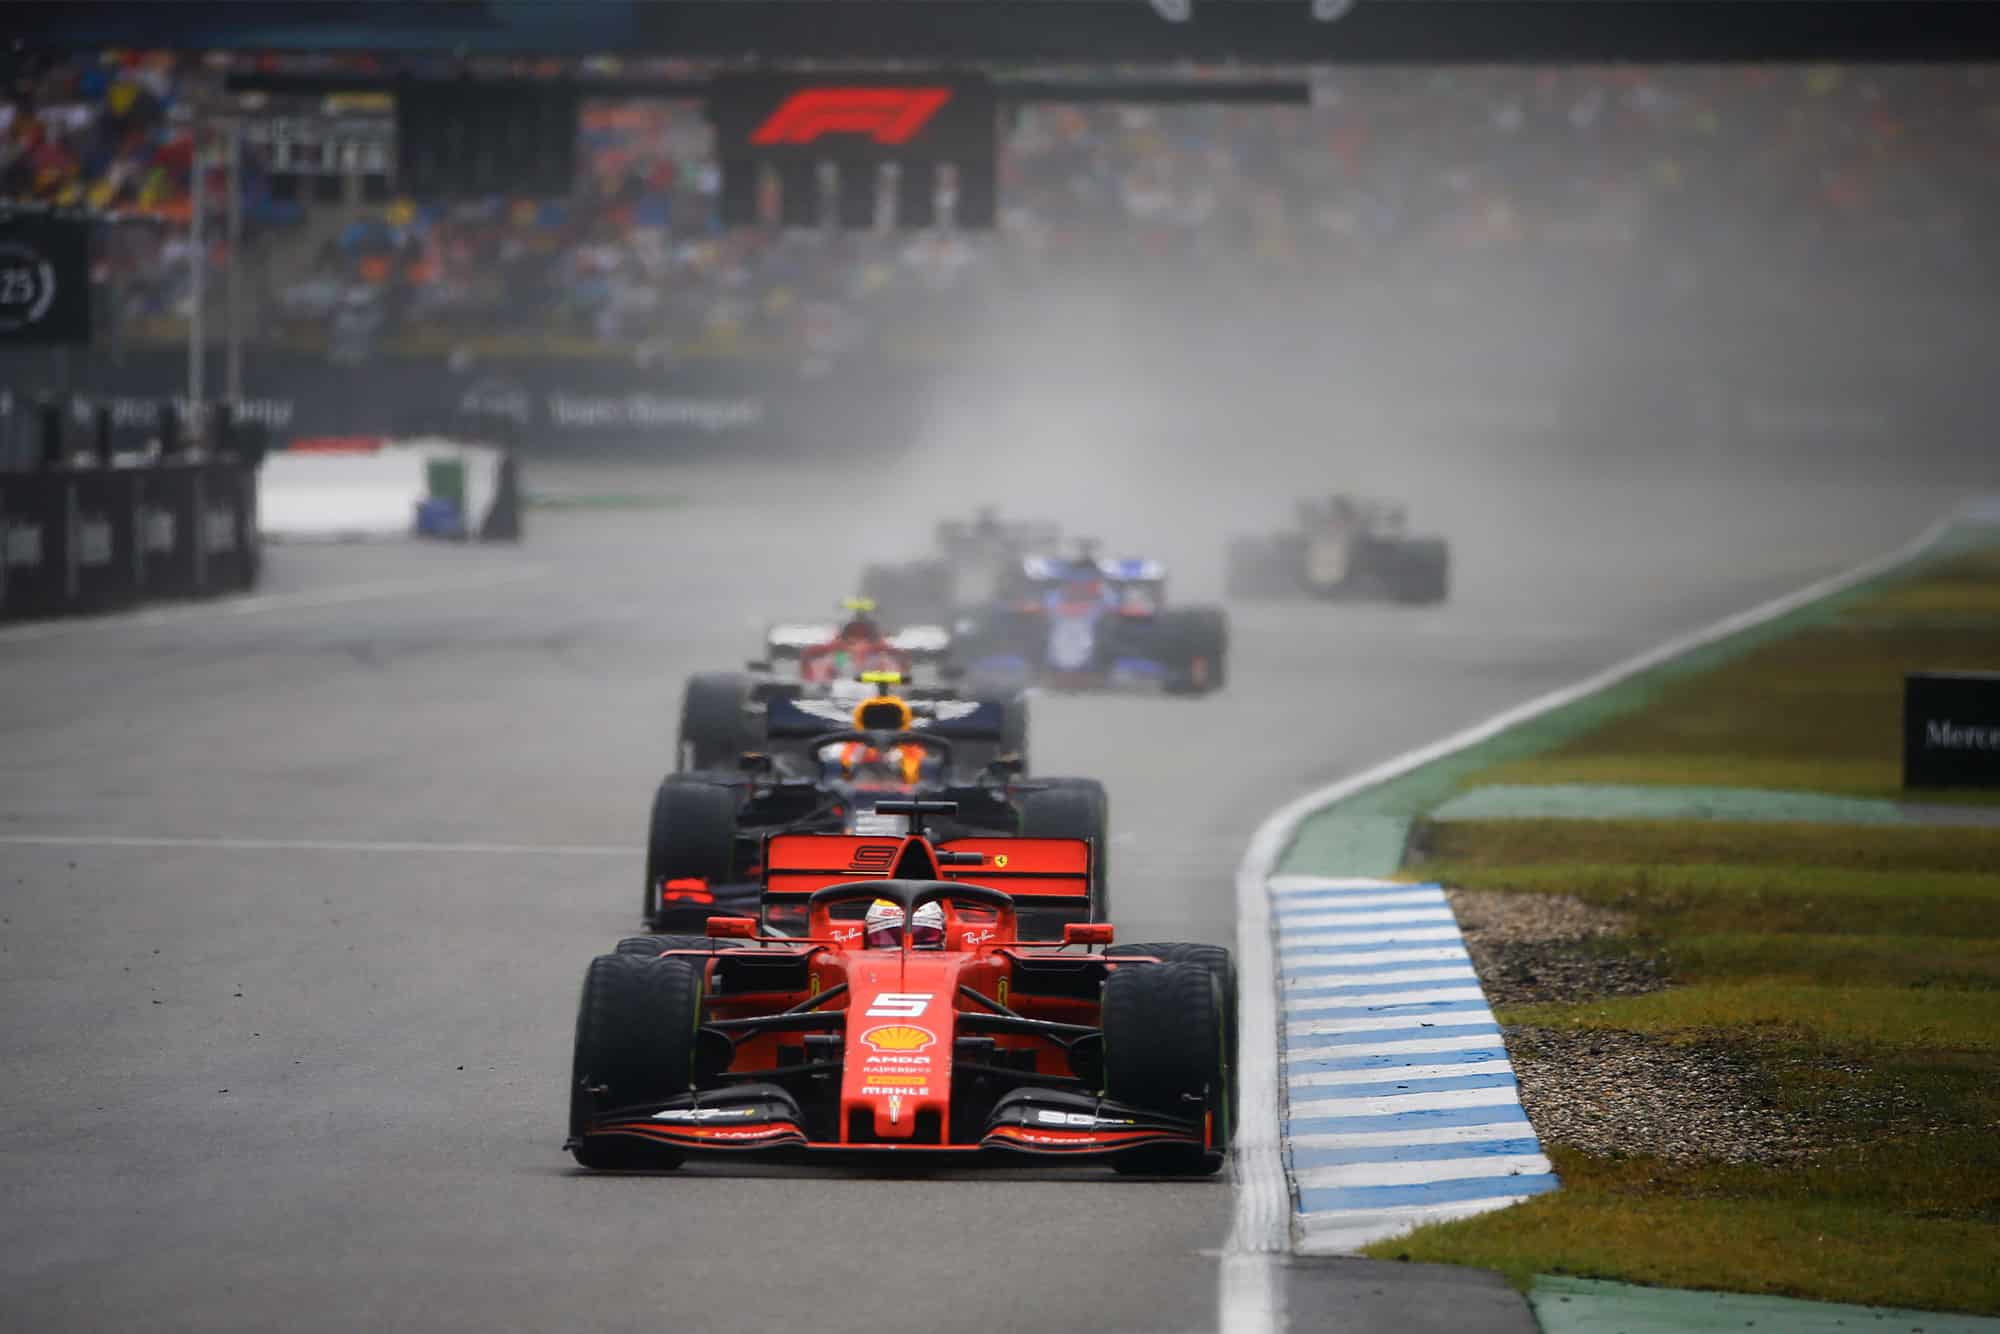 Sebastian Vettel fought back to finish third in the 2019 German Grand Prix